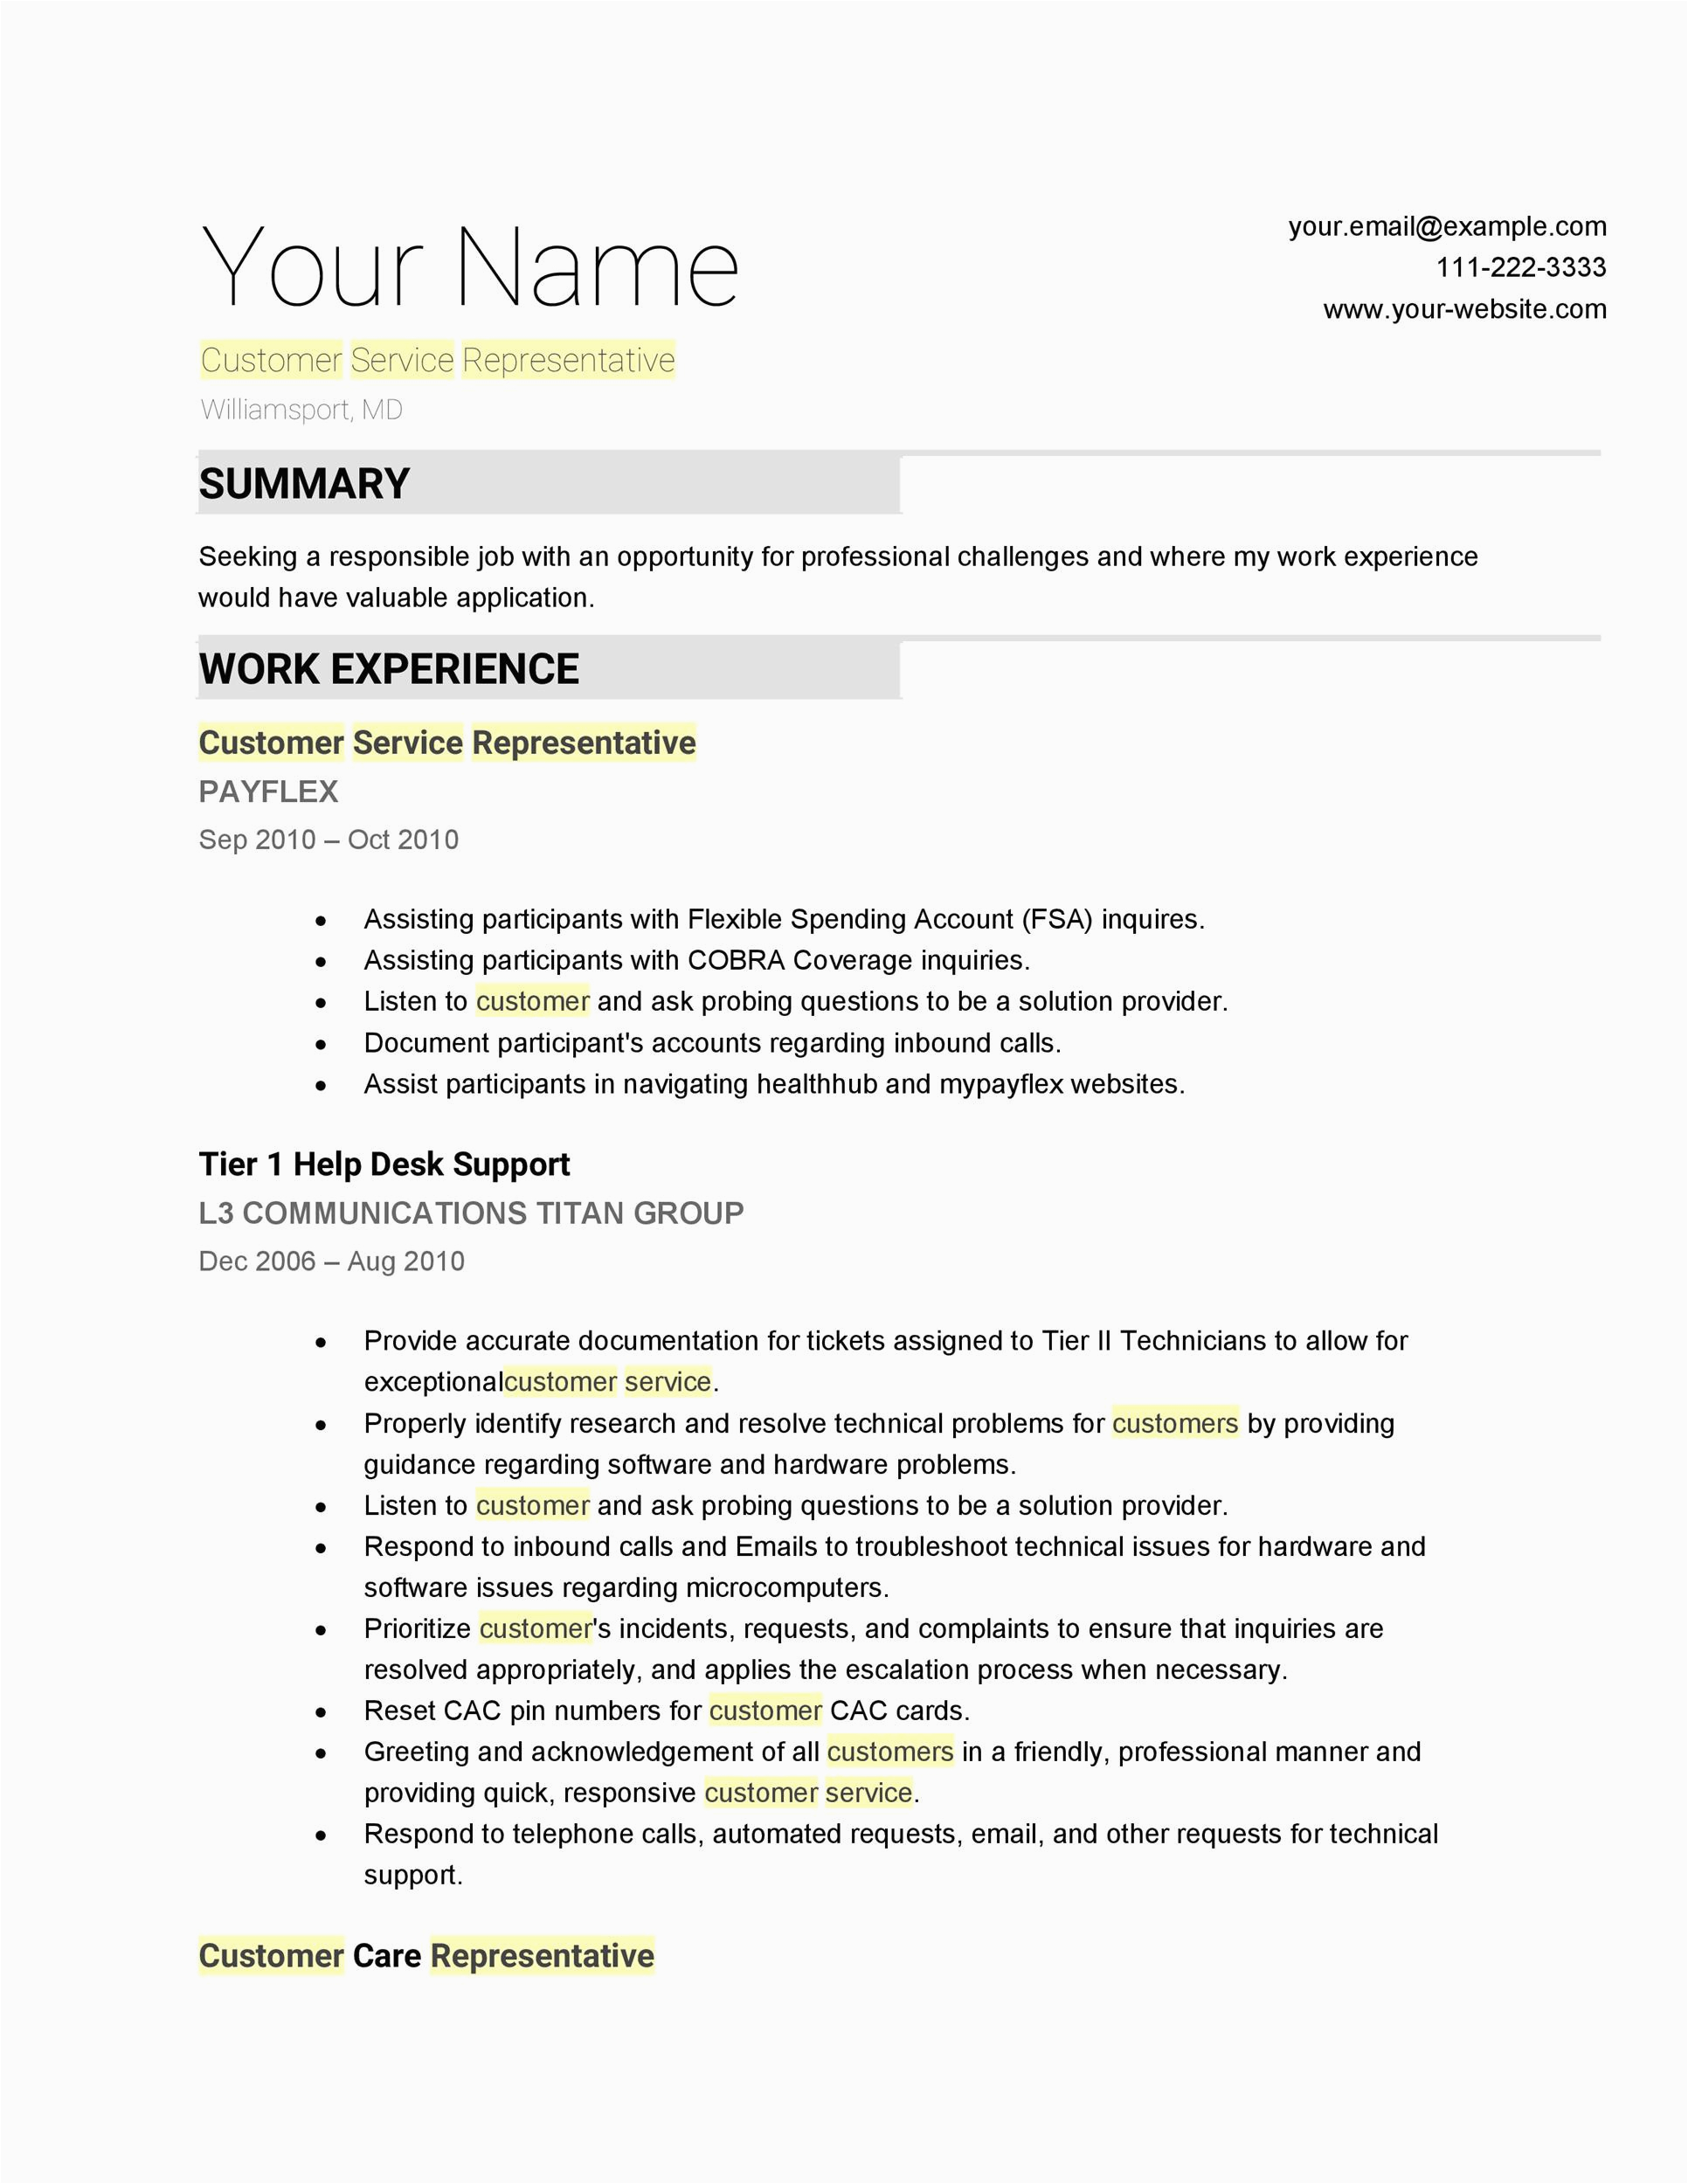 Sample Professional Resume for Customer Service 30 Customer Service Resume Examples Templatelab